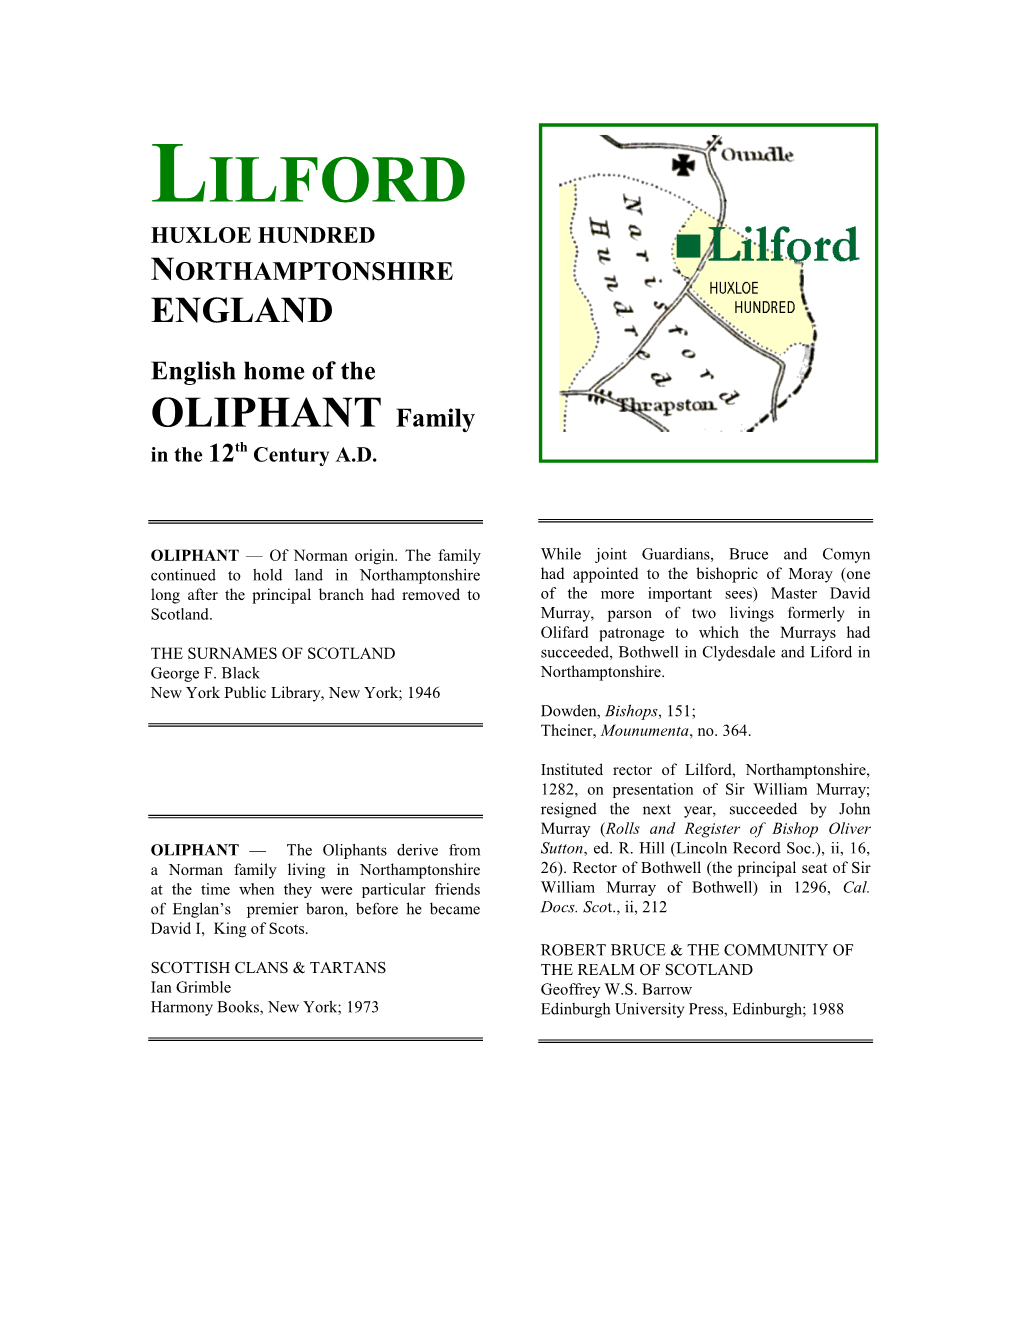 Lilford: Huxloe Hundred, England